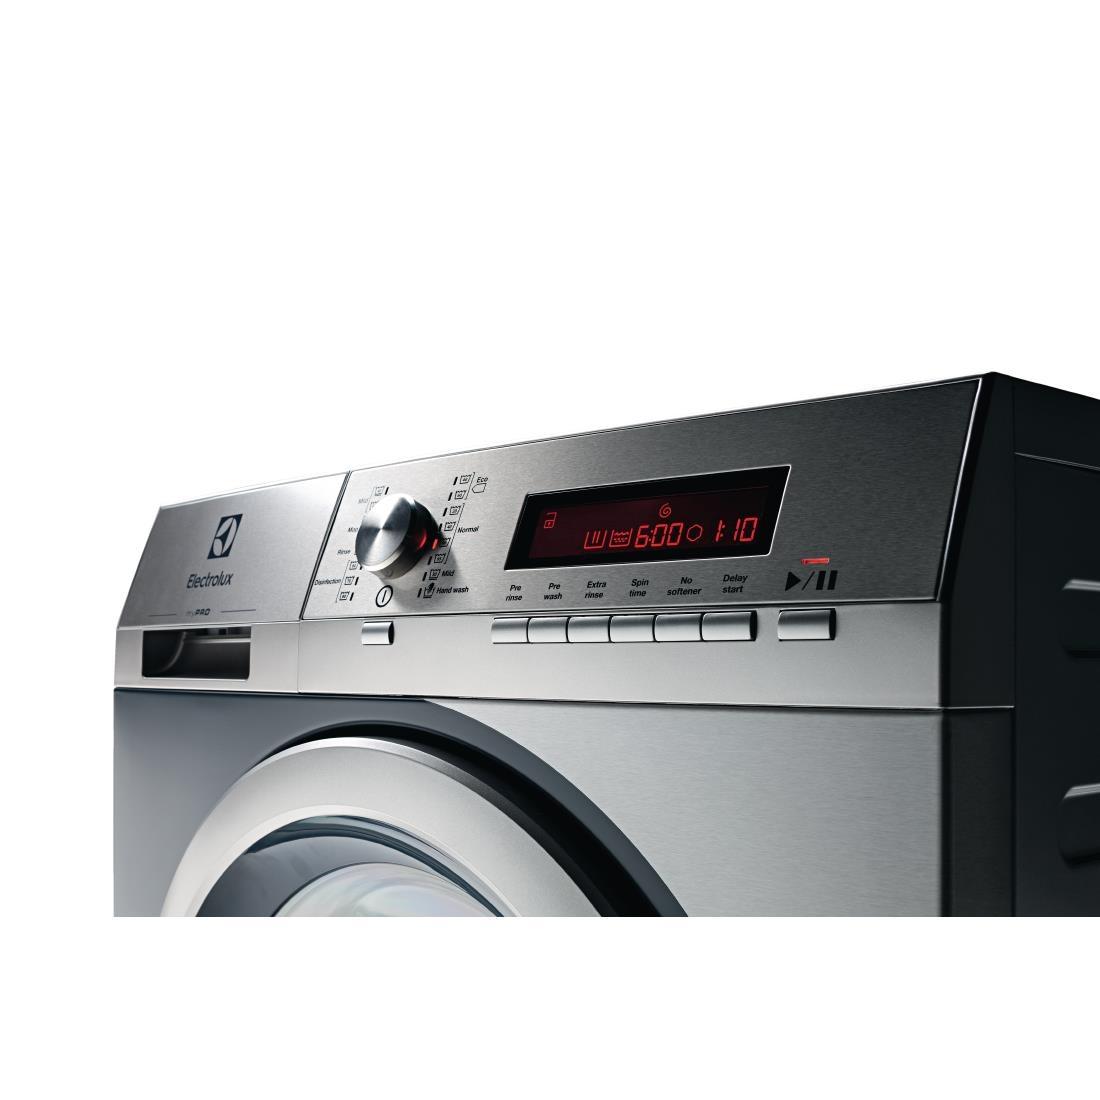 Electrolux myPRO Commercial Tumble Dryer TE1120 - CK376  - 6